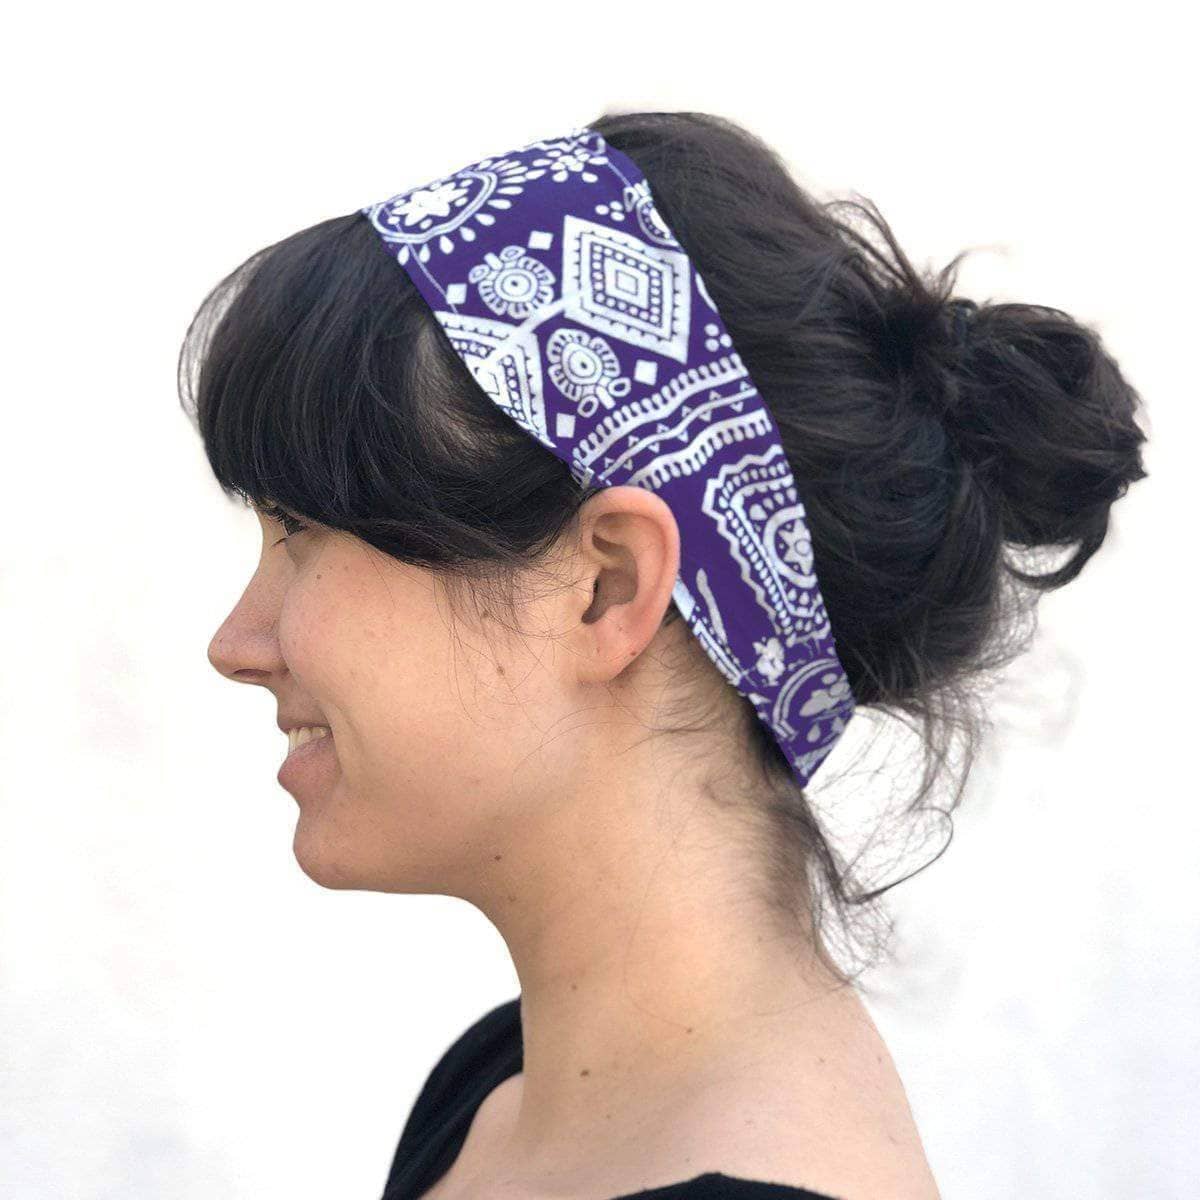 Yoga Headbands - and How to Wear Them! - Darn Good Yarn